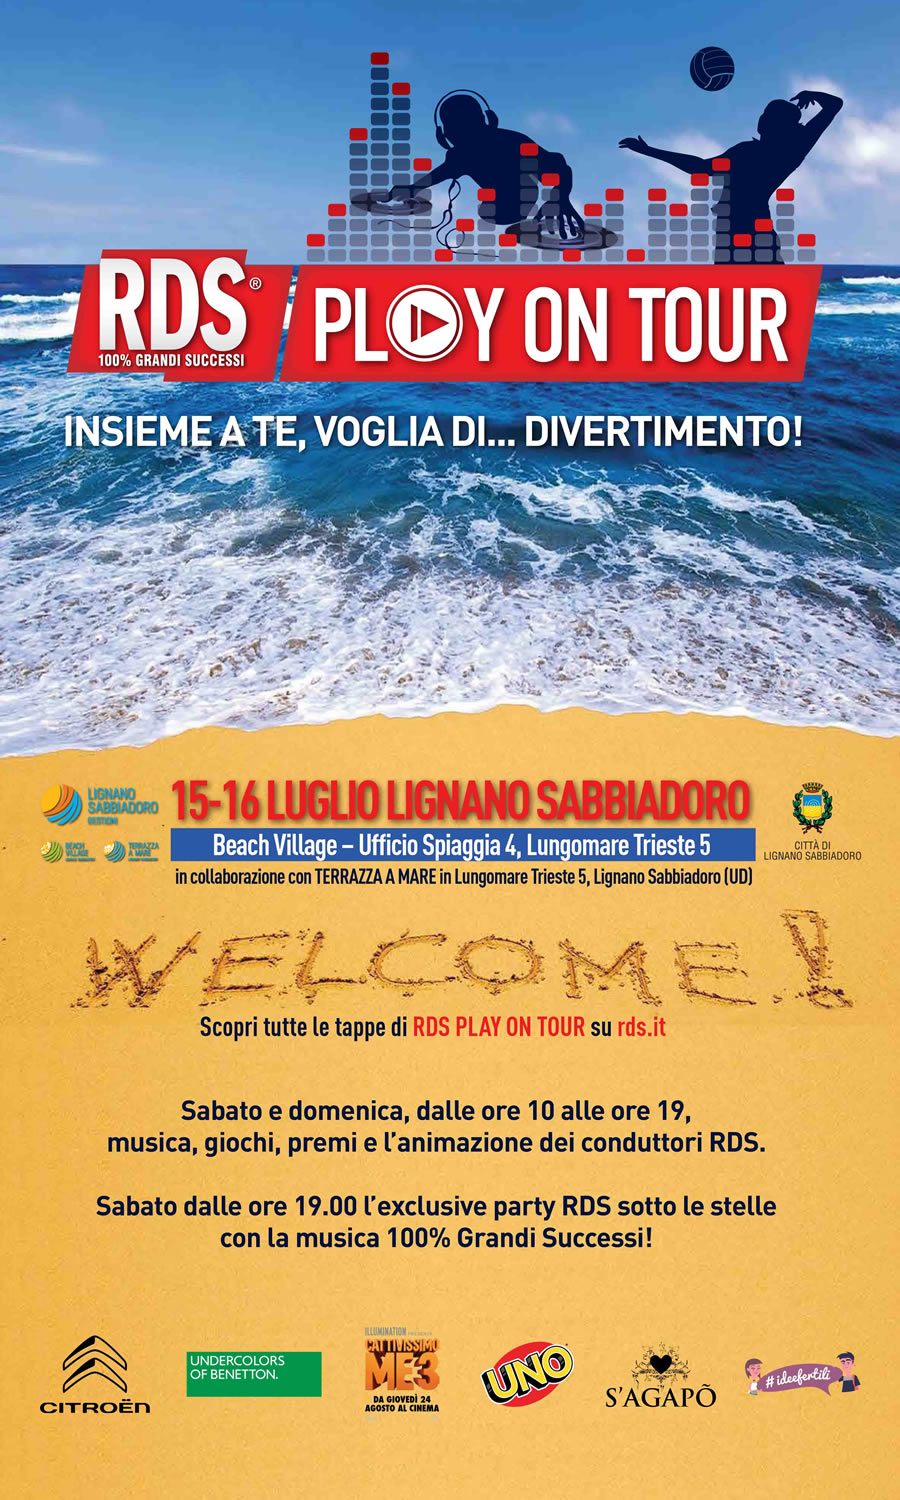 RDS Play on Tour Lignano Sabbiadoro